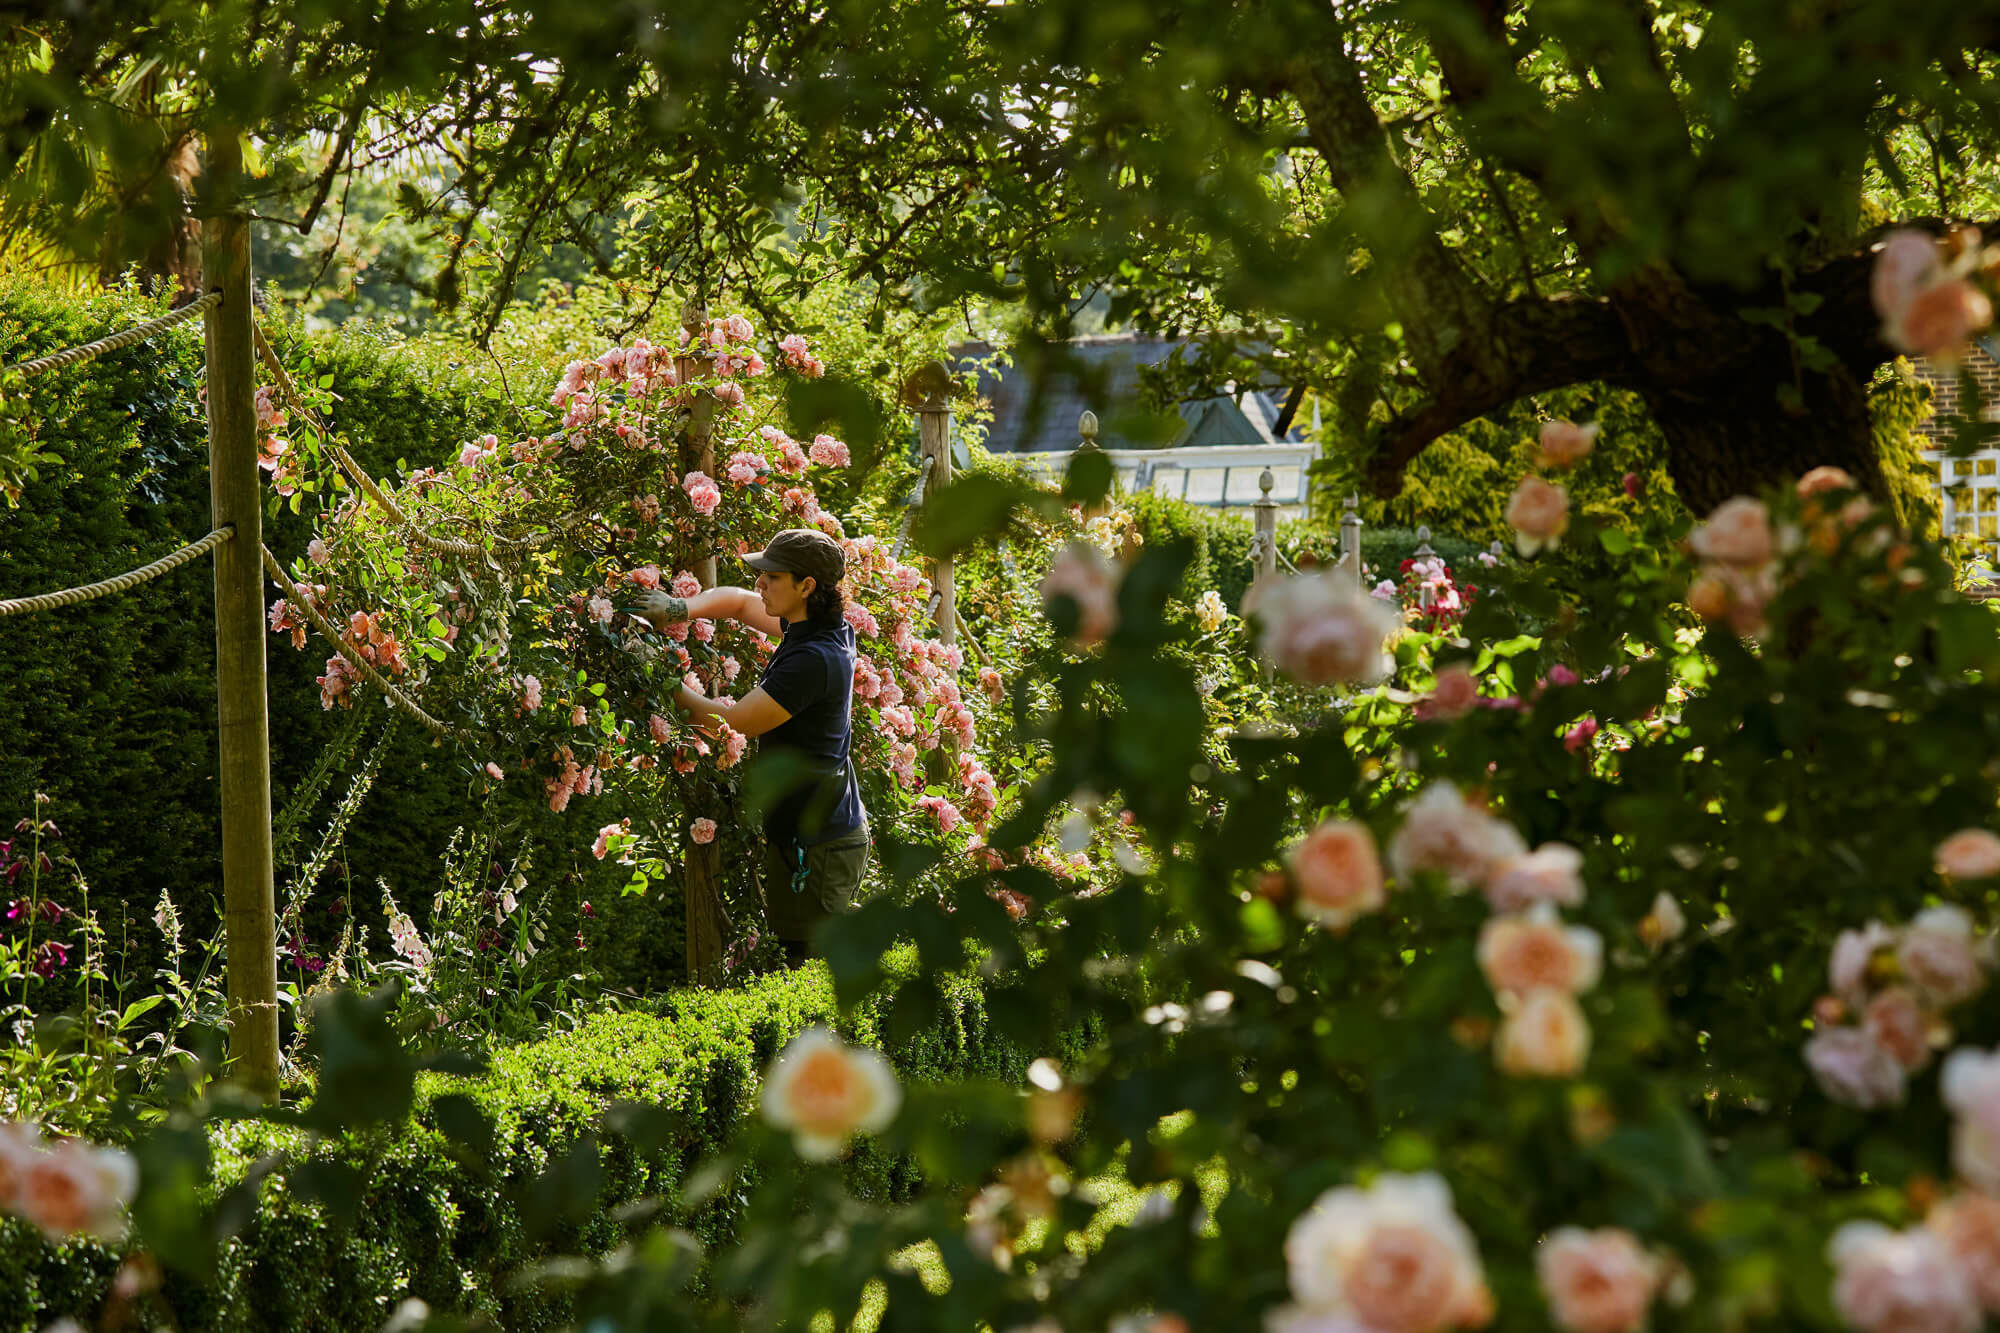 A gardener pruning roses in the Rose Garden at Borde Hil